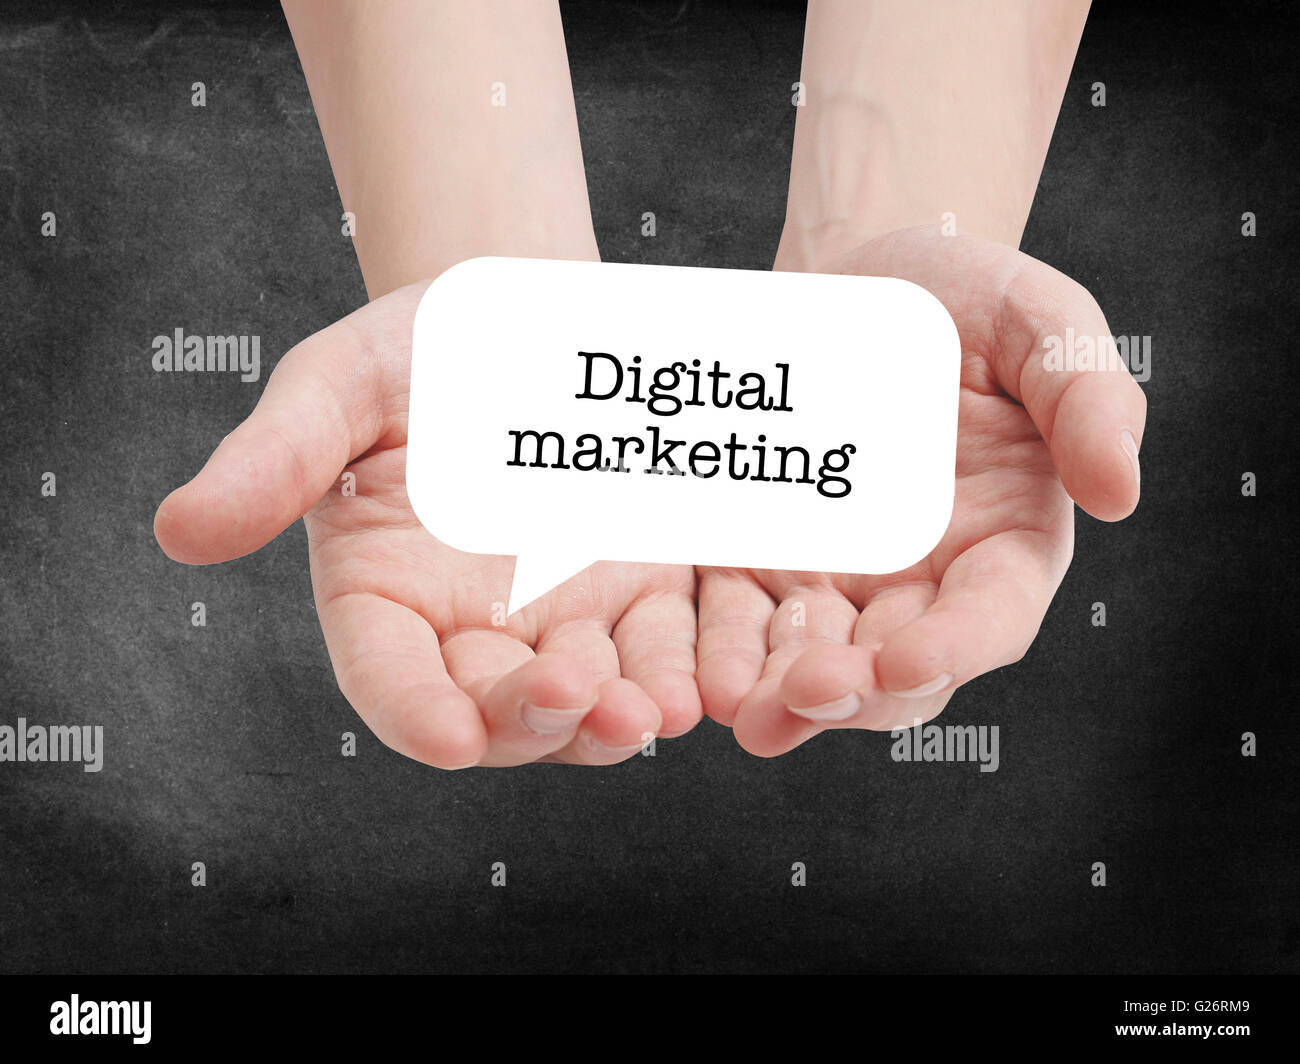 Digital marketing written on a speechbubble Stock Photo